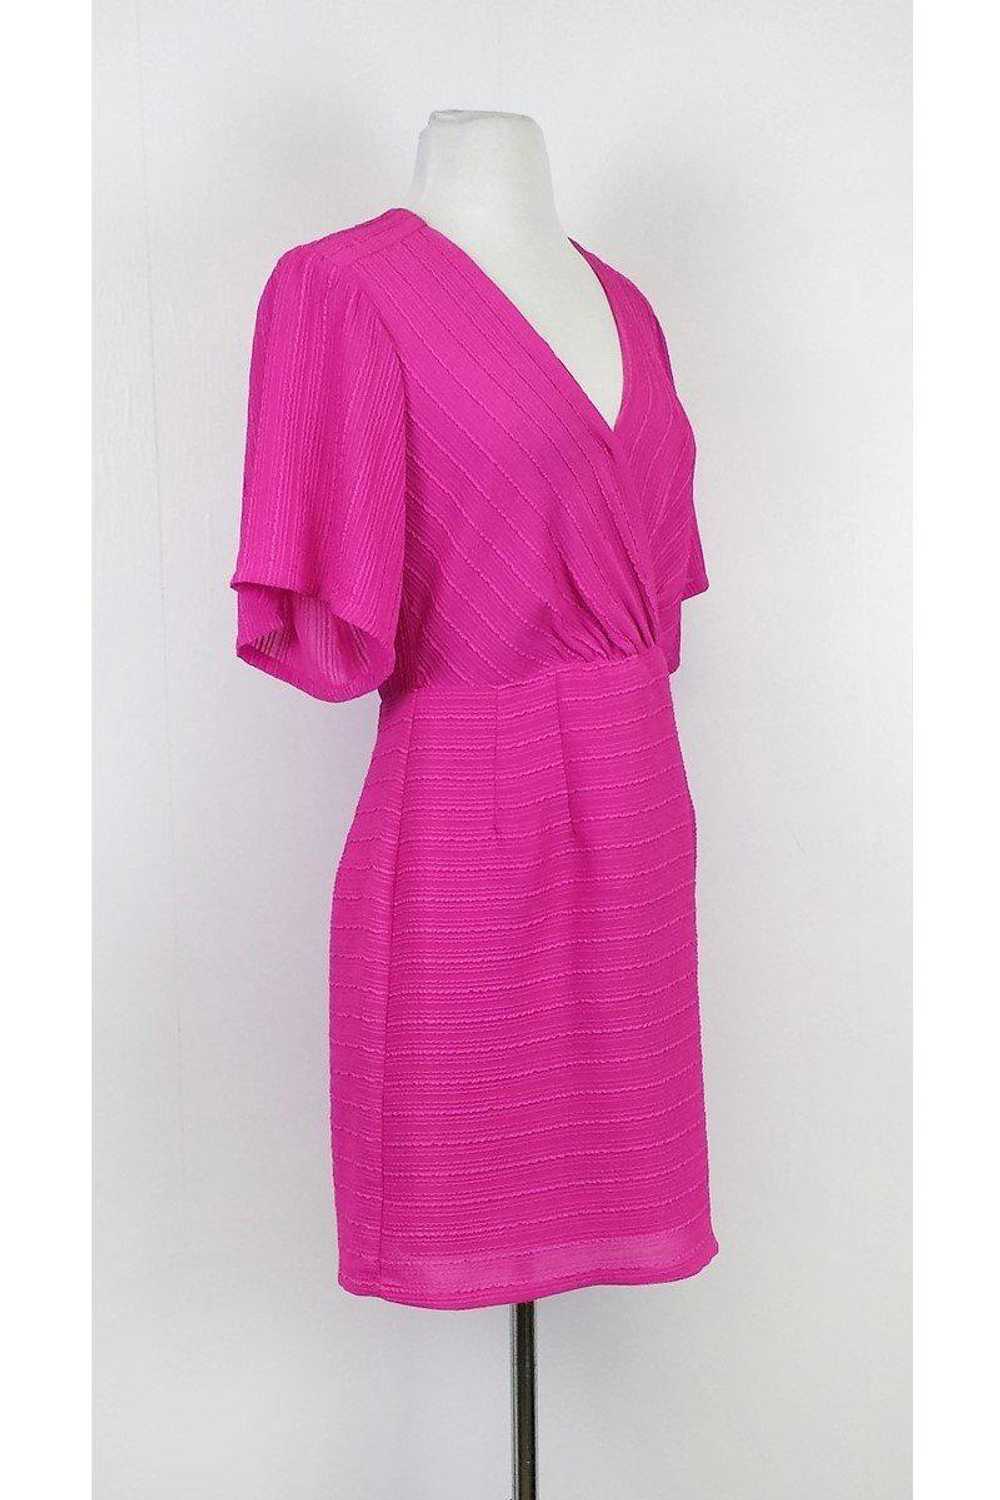 Nanette Lepore - Hot Pink Textured Dress Sz 2 - image 2